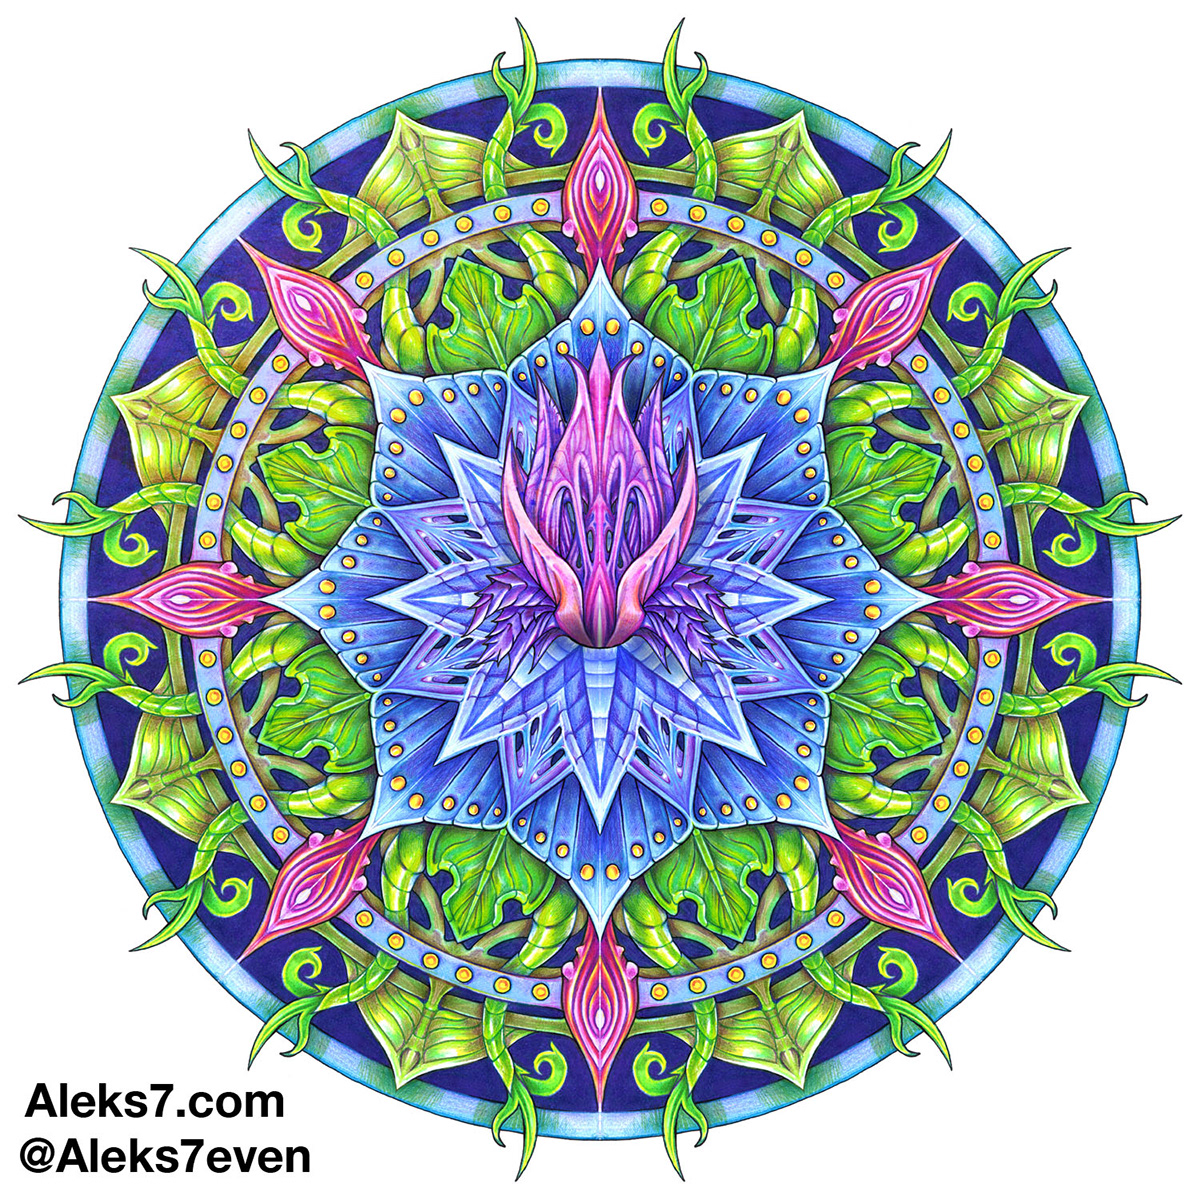 Mandala geometry aleks7